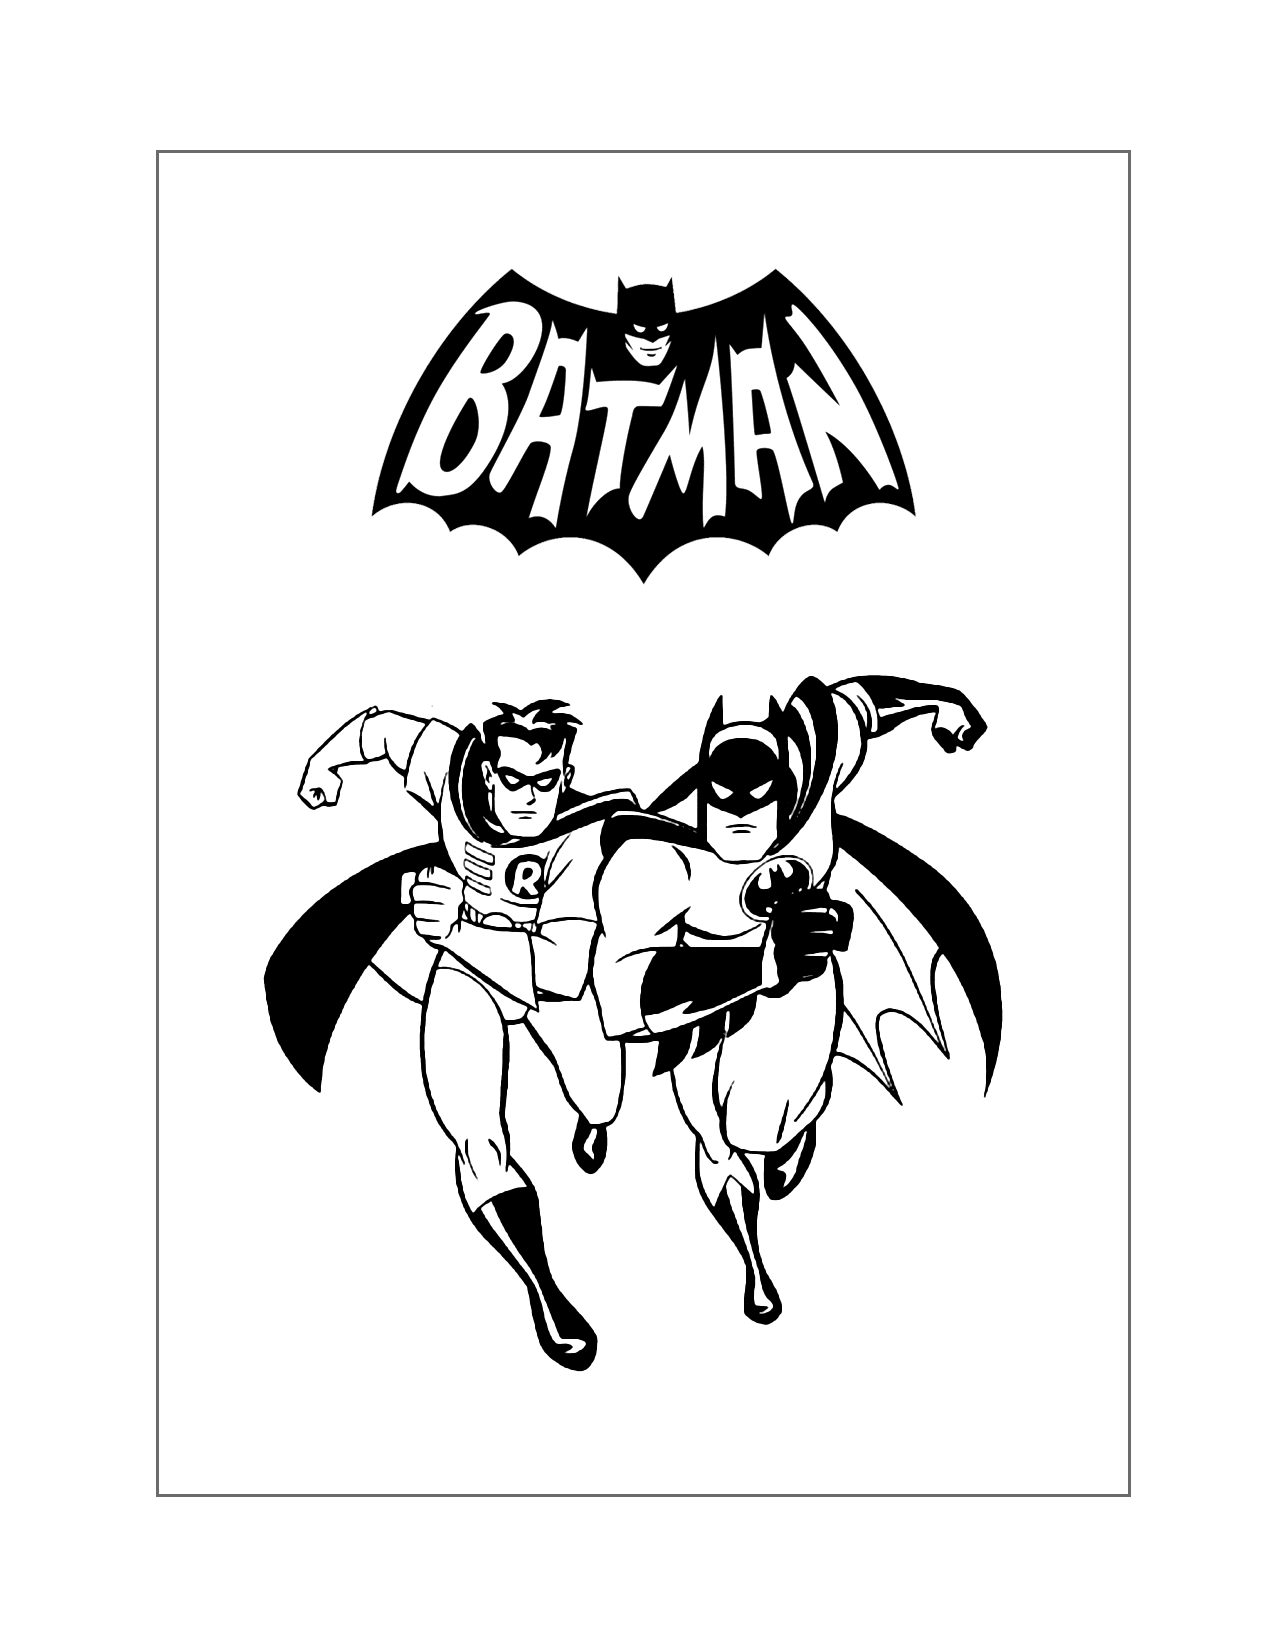 Batman And Robin Coloring Page